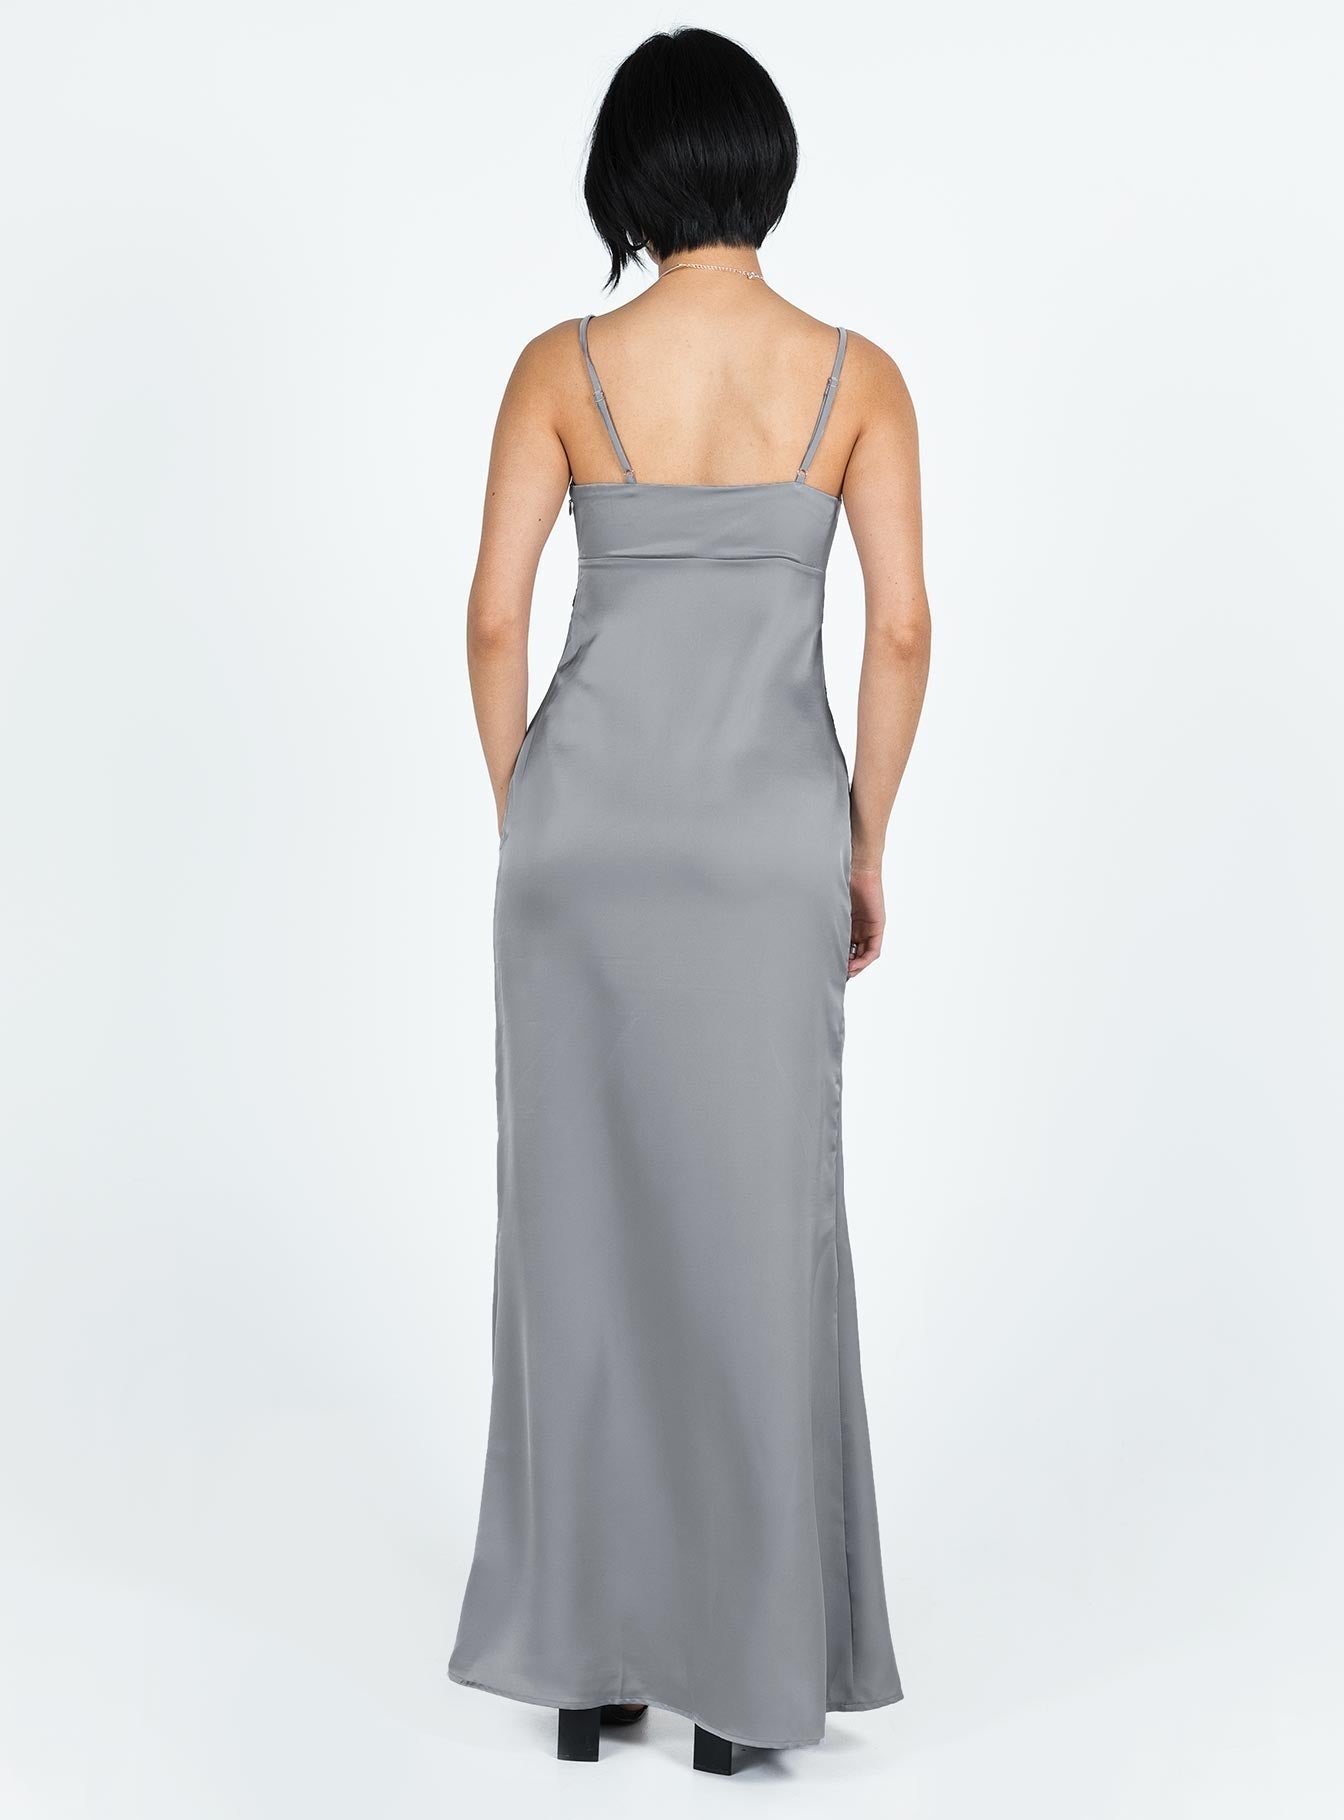 Shop Formal Dress - Sidney Lace Trim Maxi Dress Grey secondary image